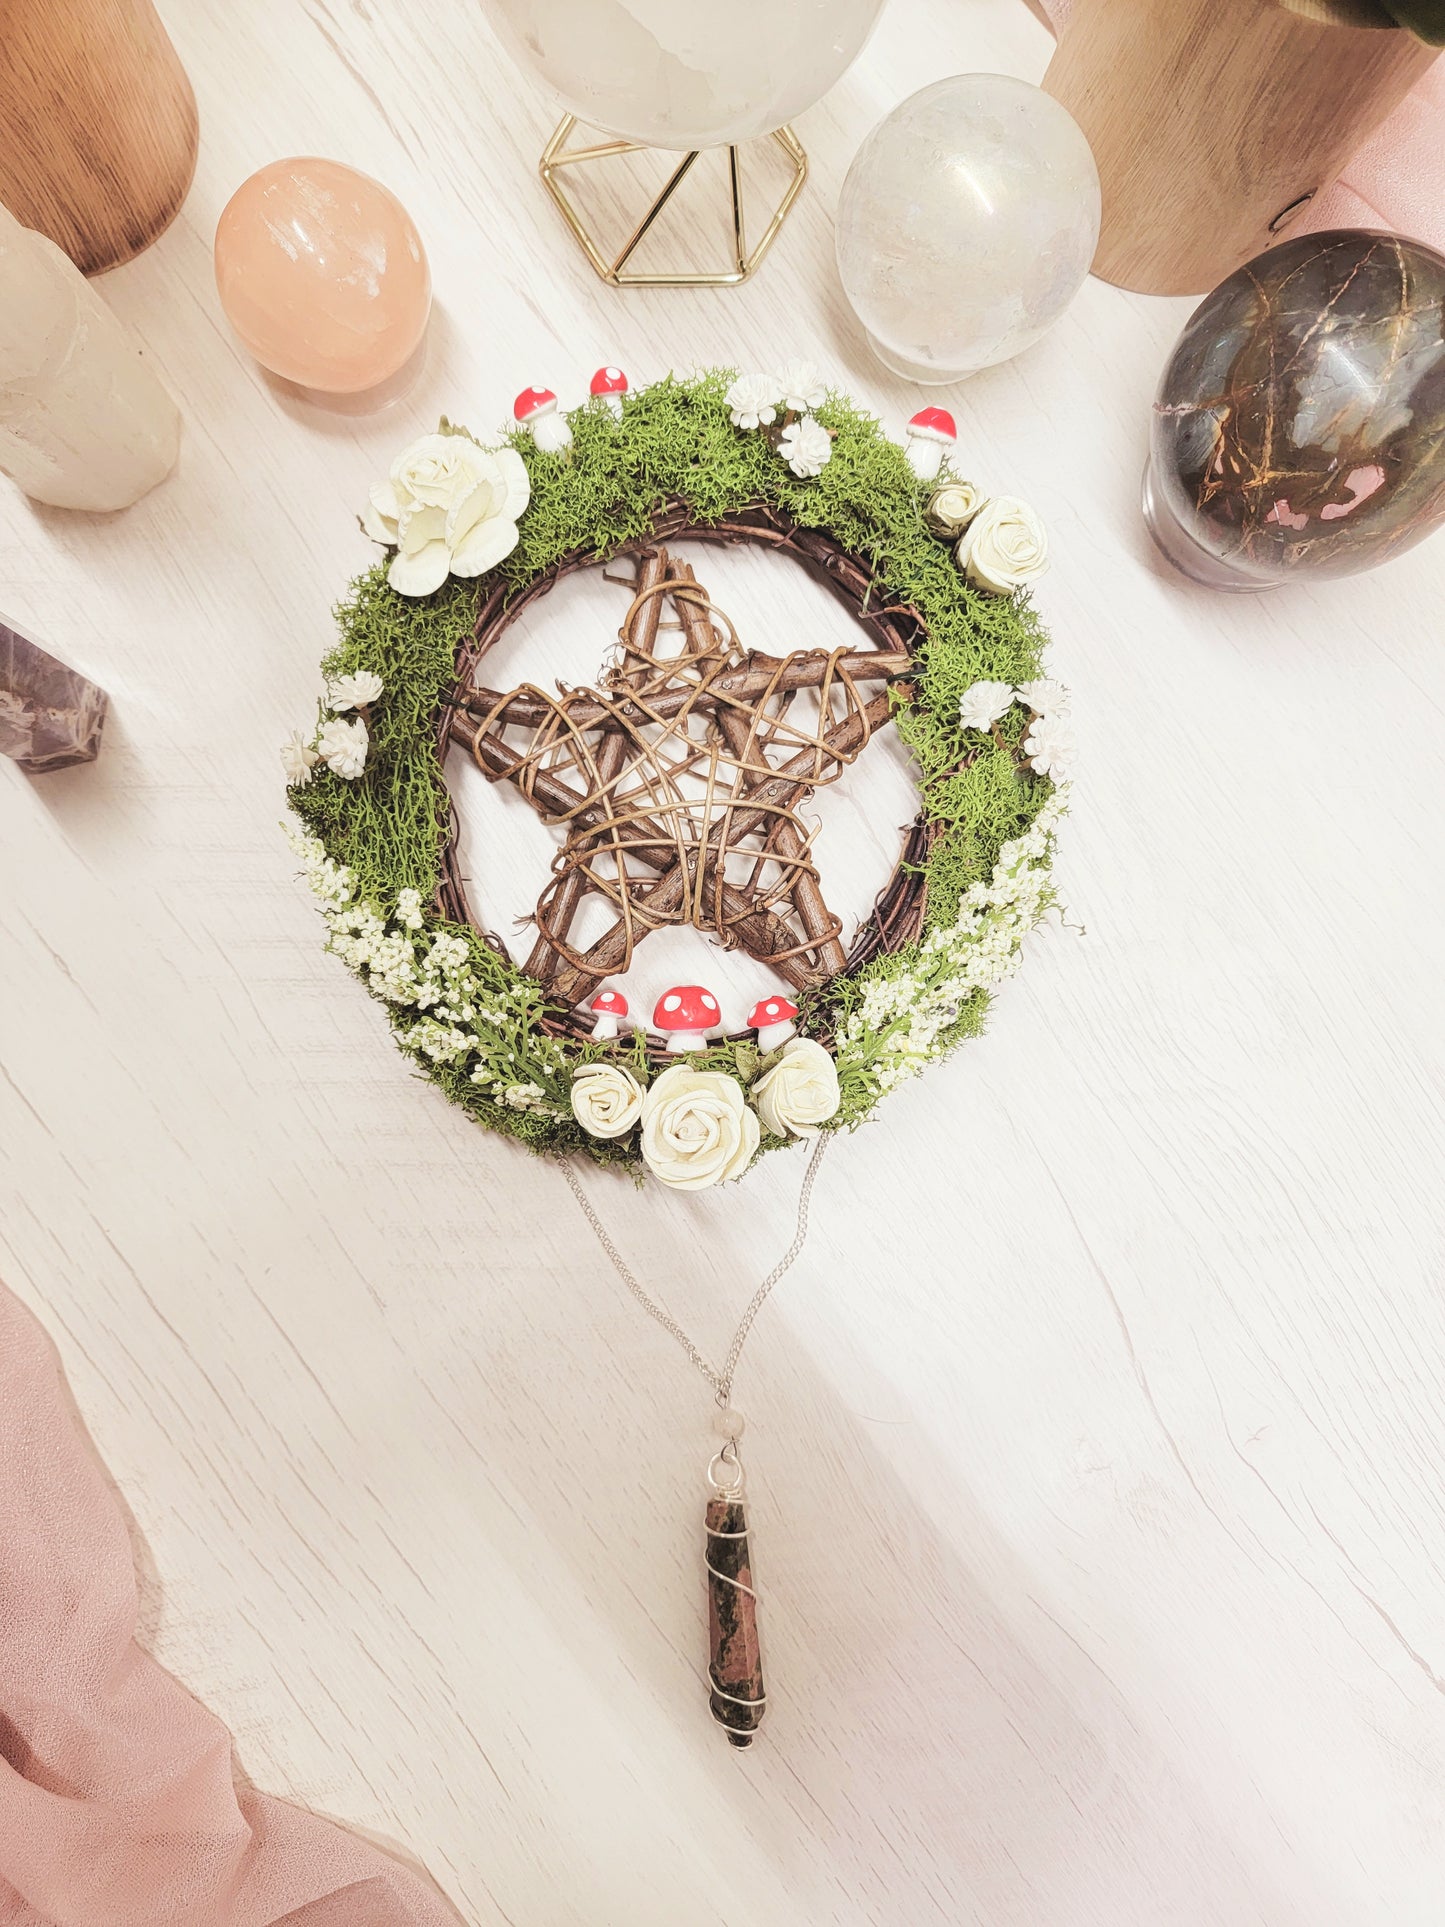 Pentagram Wreath with Mushrooms